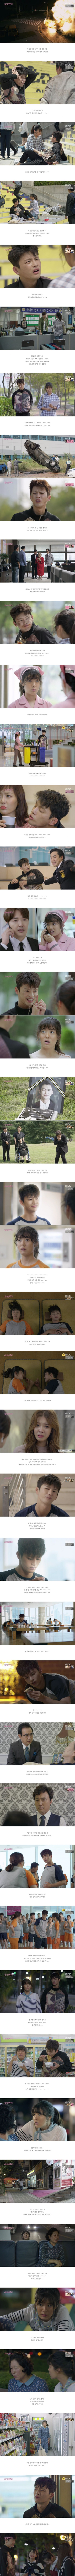 episode 2 captures for the Korean drama 'Shopping King Louis'